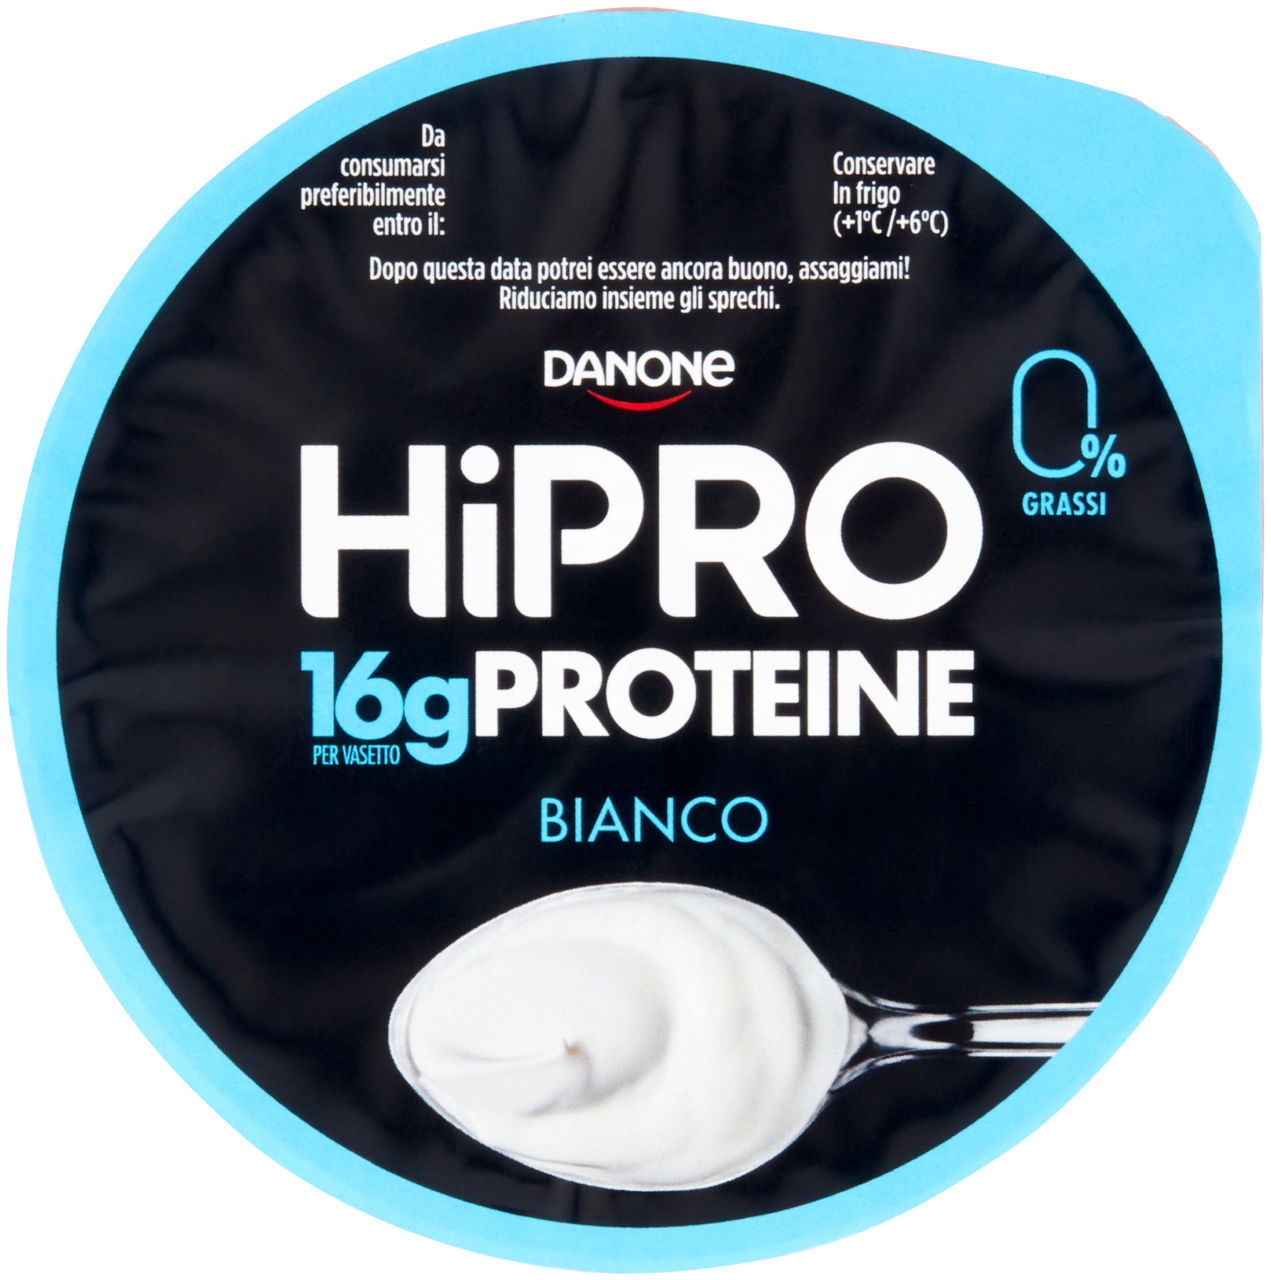 HIPRO BIANCO NAT HI PRO DANONE G 160 - 0